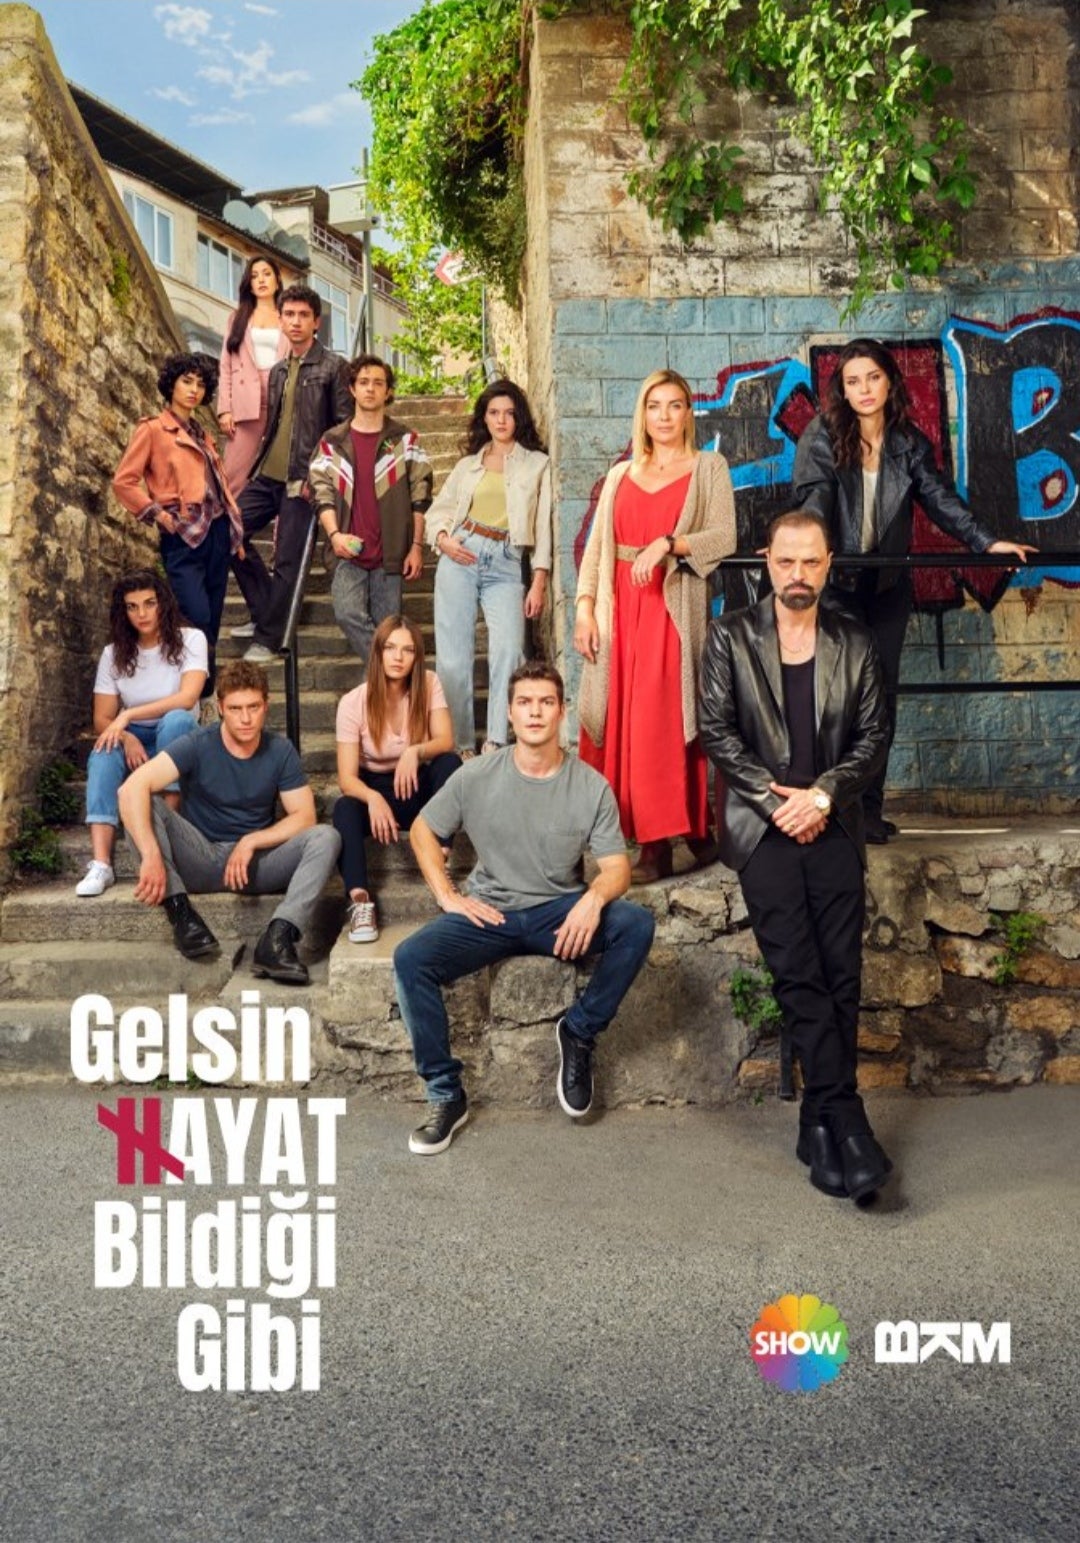 TV ratings for Gelsin Hayat Bildigi Gibi in Turkey. Show TV TV series